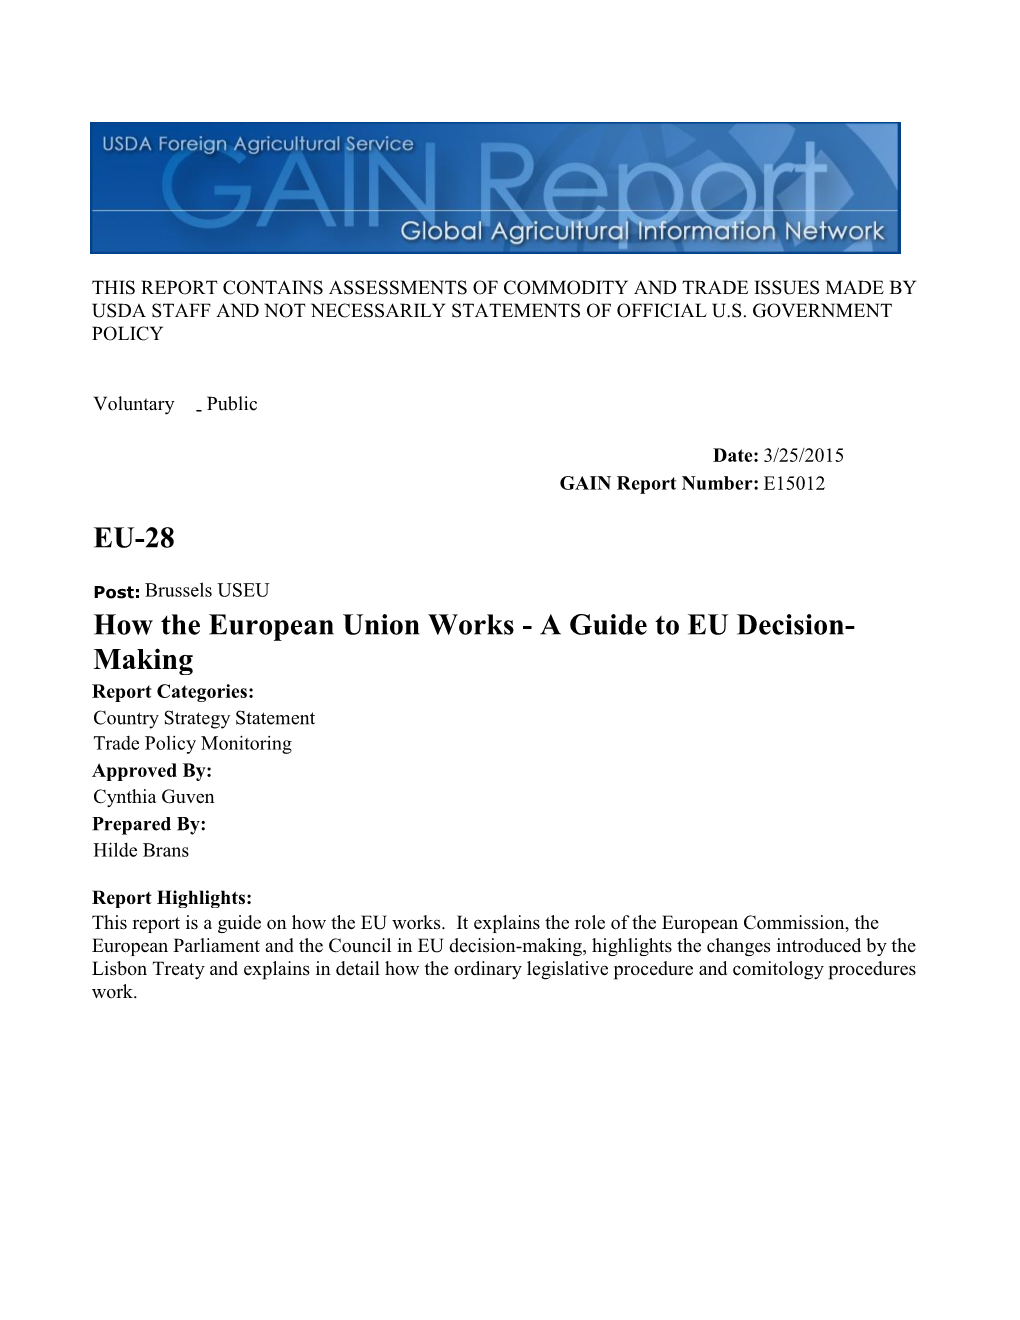 How the European Union Works - a Guide to EU Decision